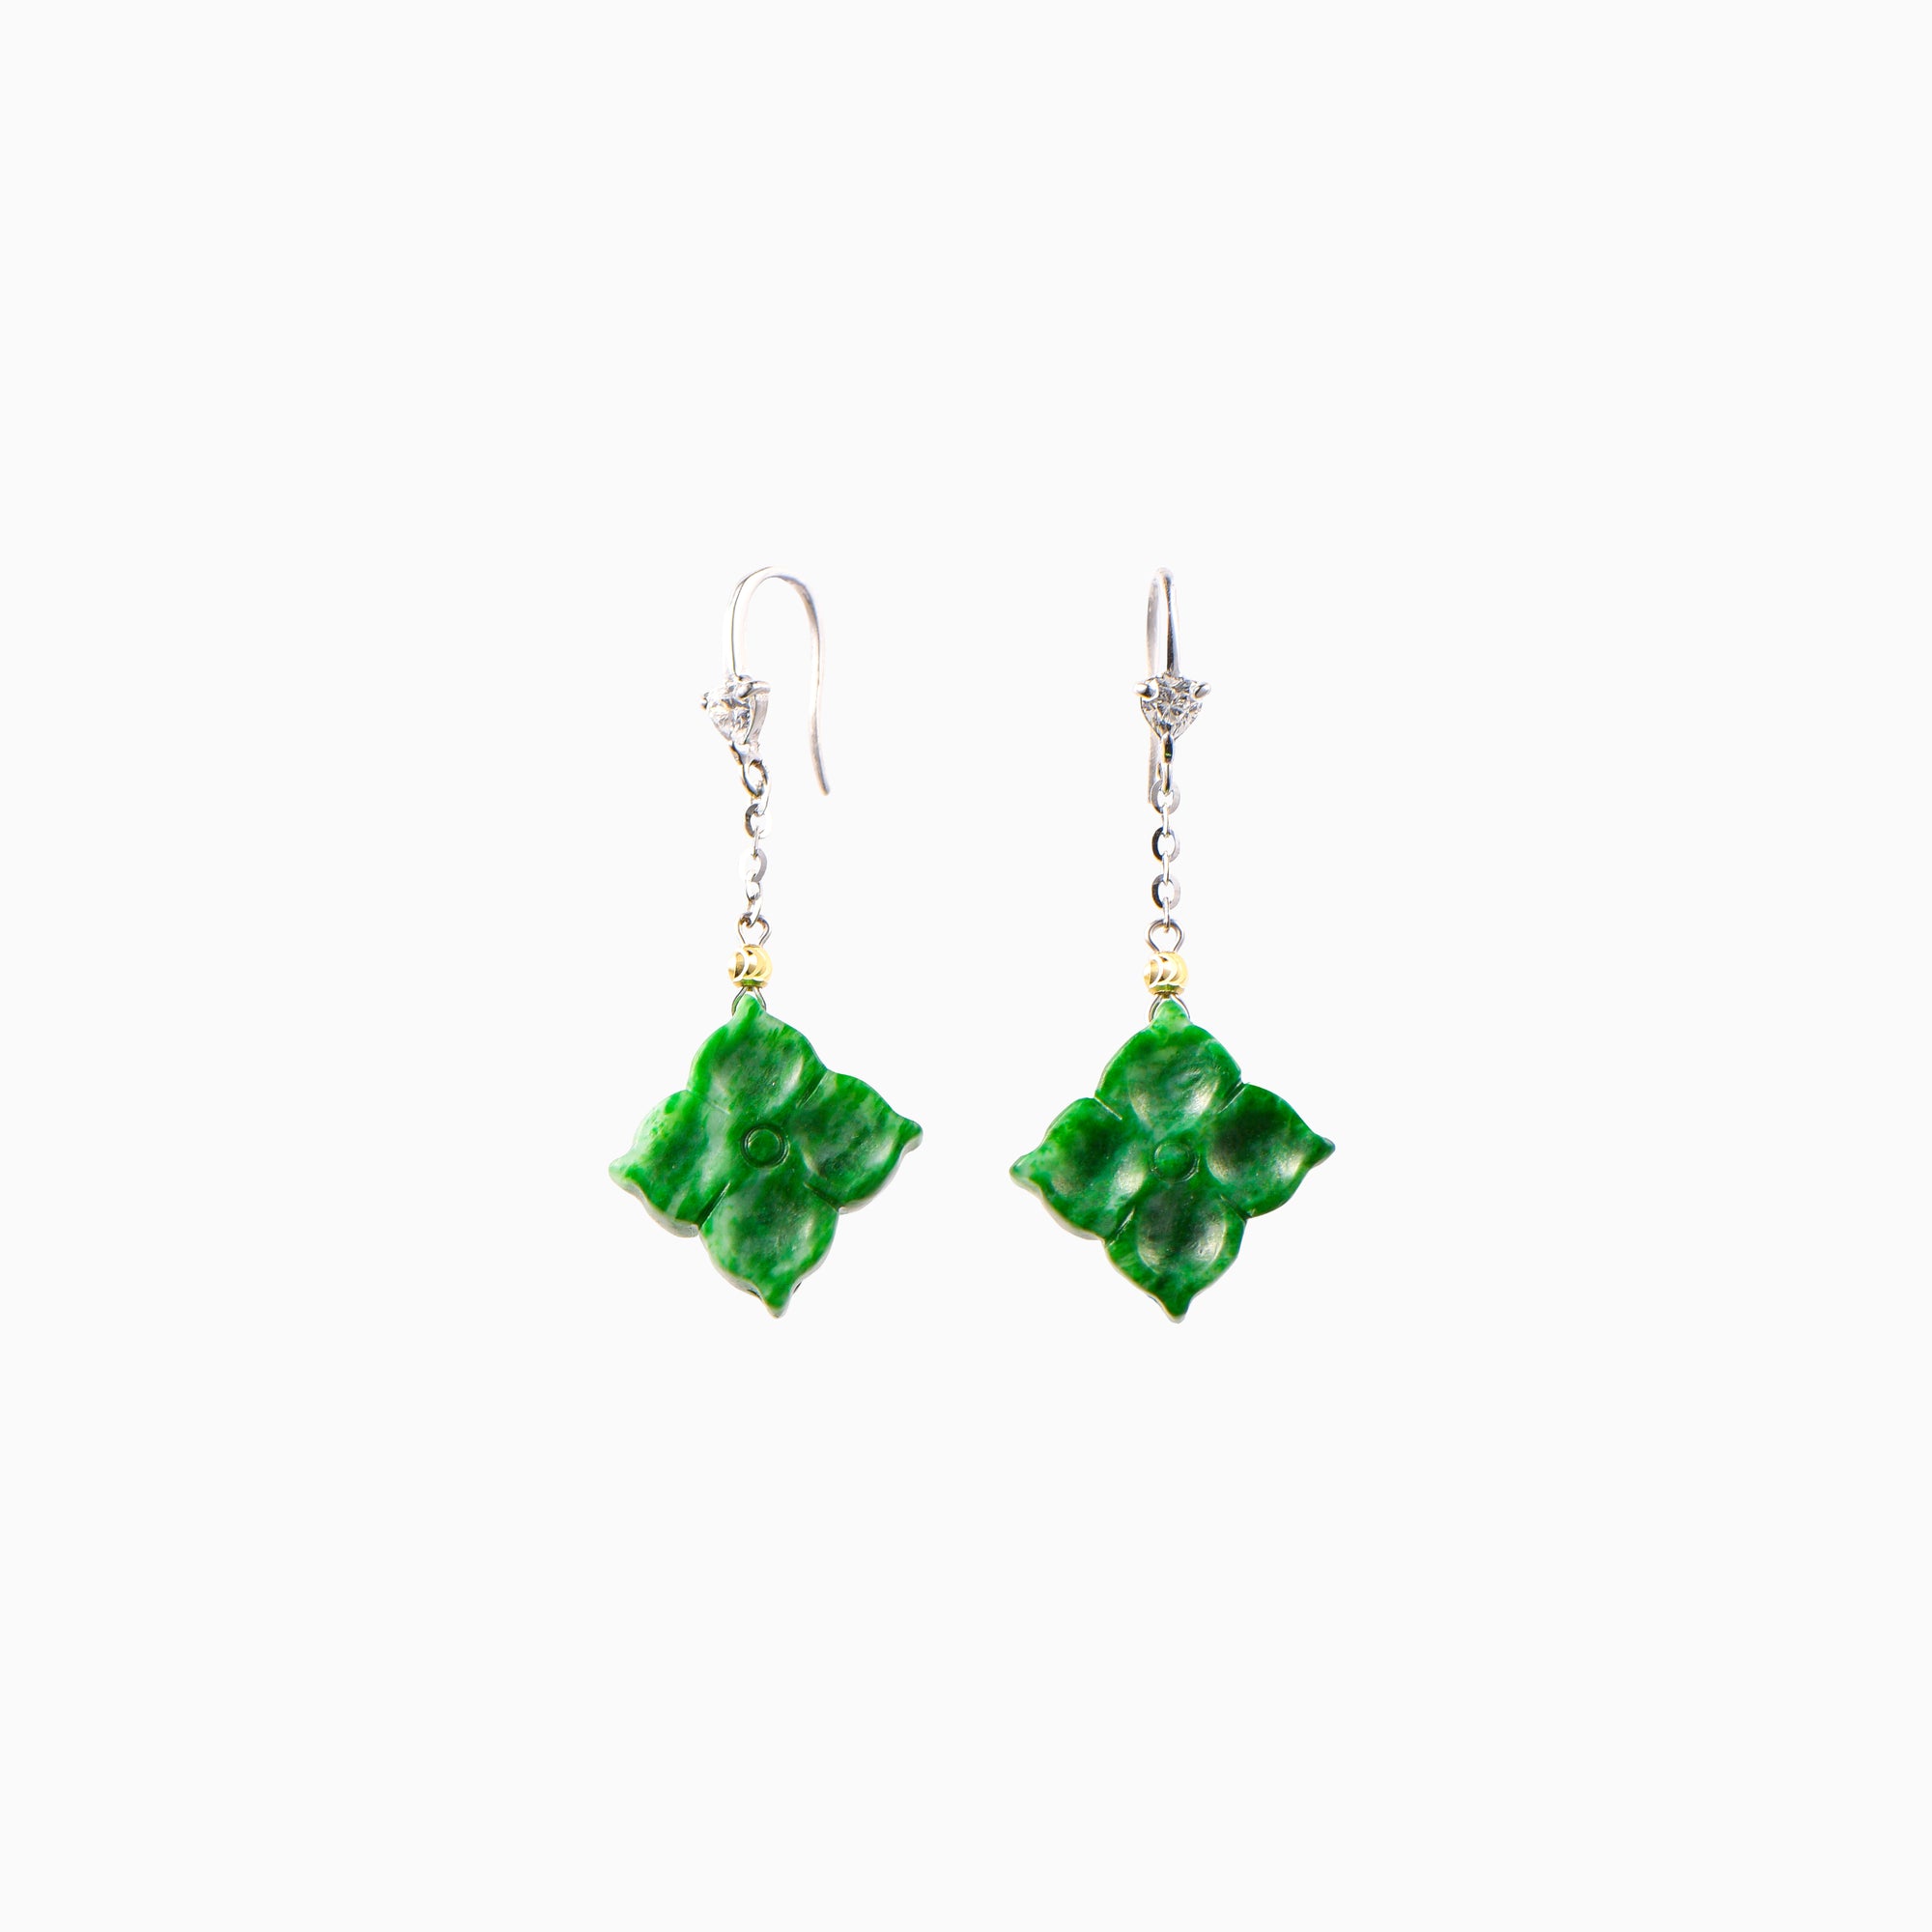 Green jade flower earrings